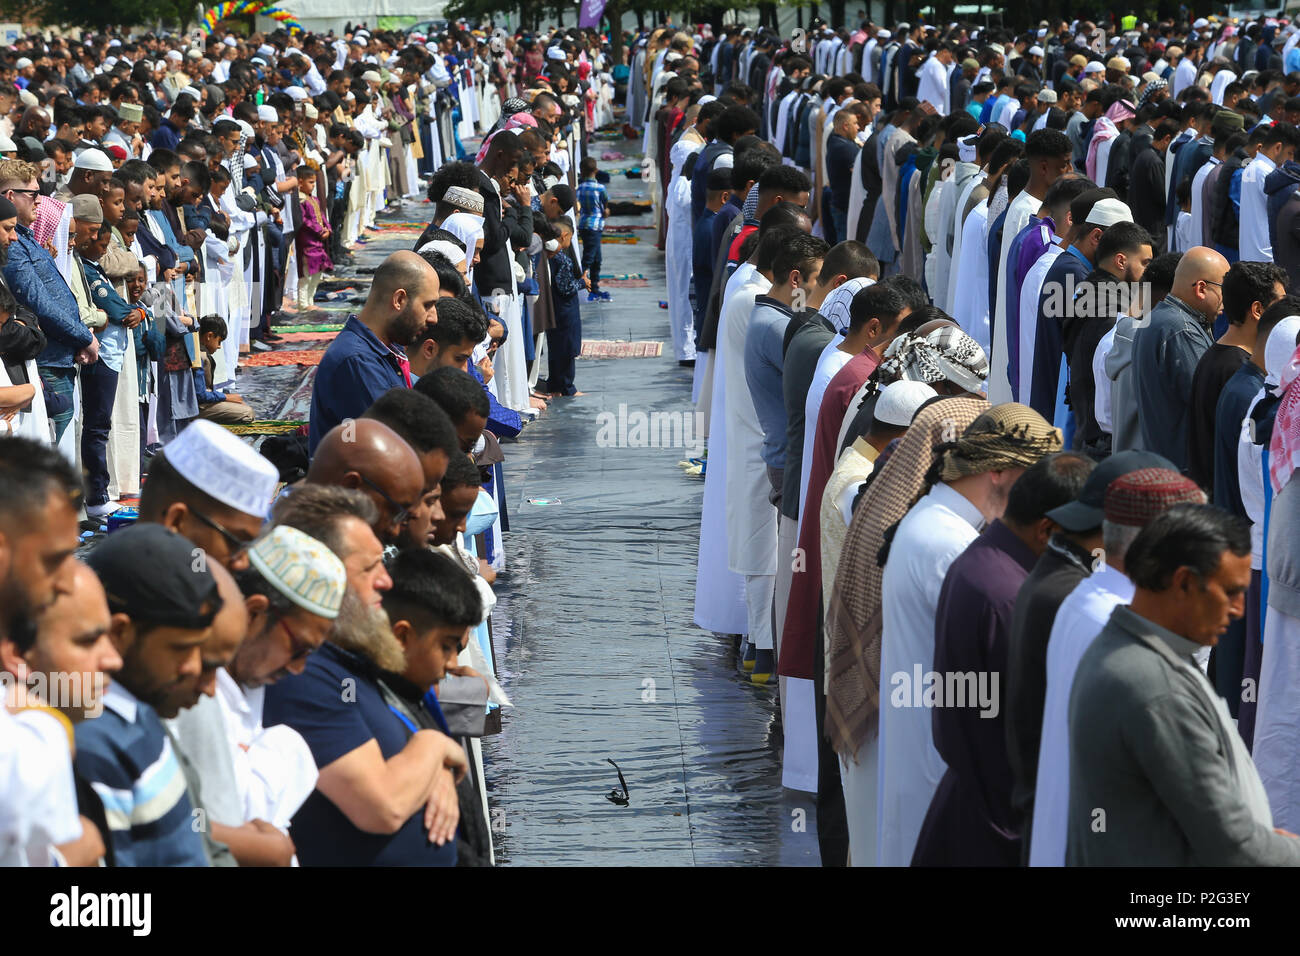 Moslem or Muslim men praying outside in Eid, Birmingham UK Stock Photo